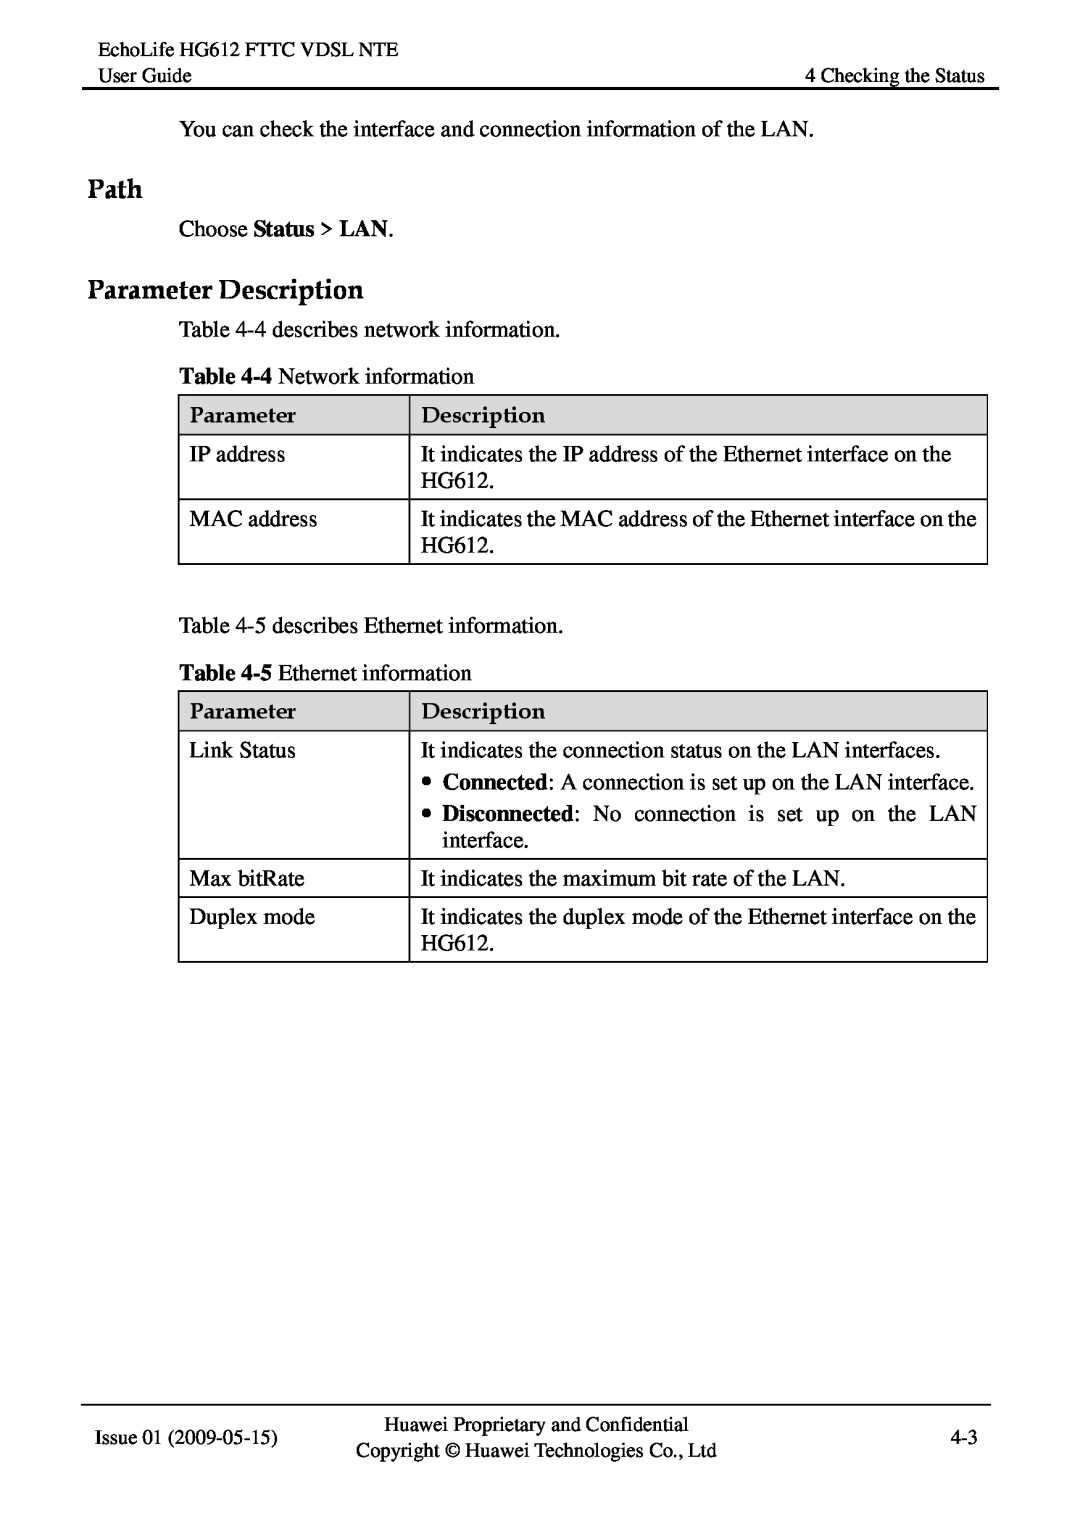 Huawei HG612FTTC VDSL NTE manual Path, Parameter Description 